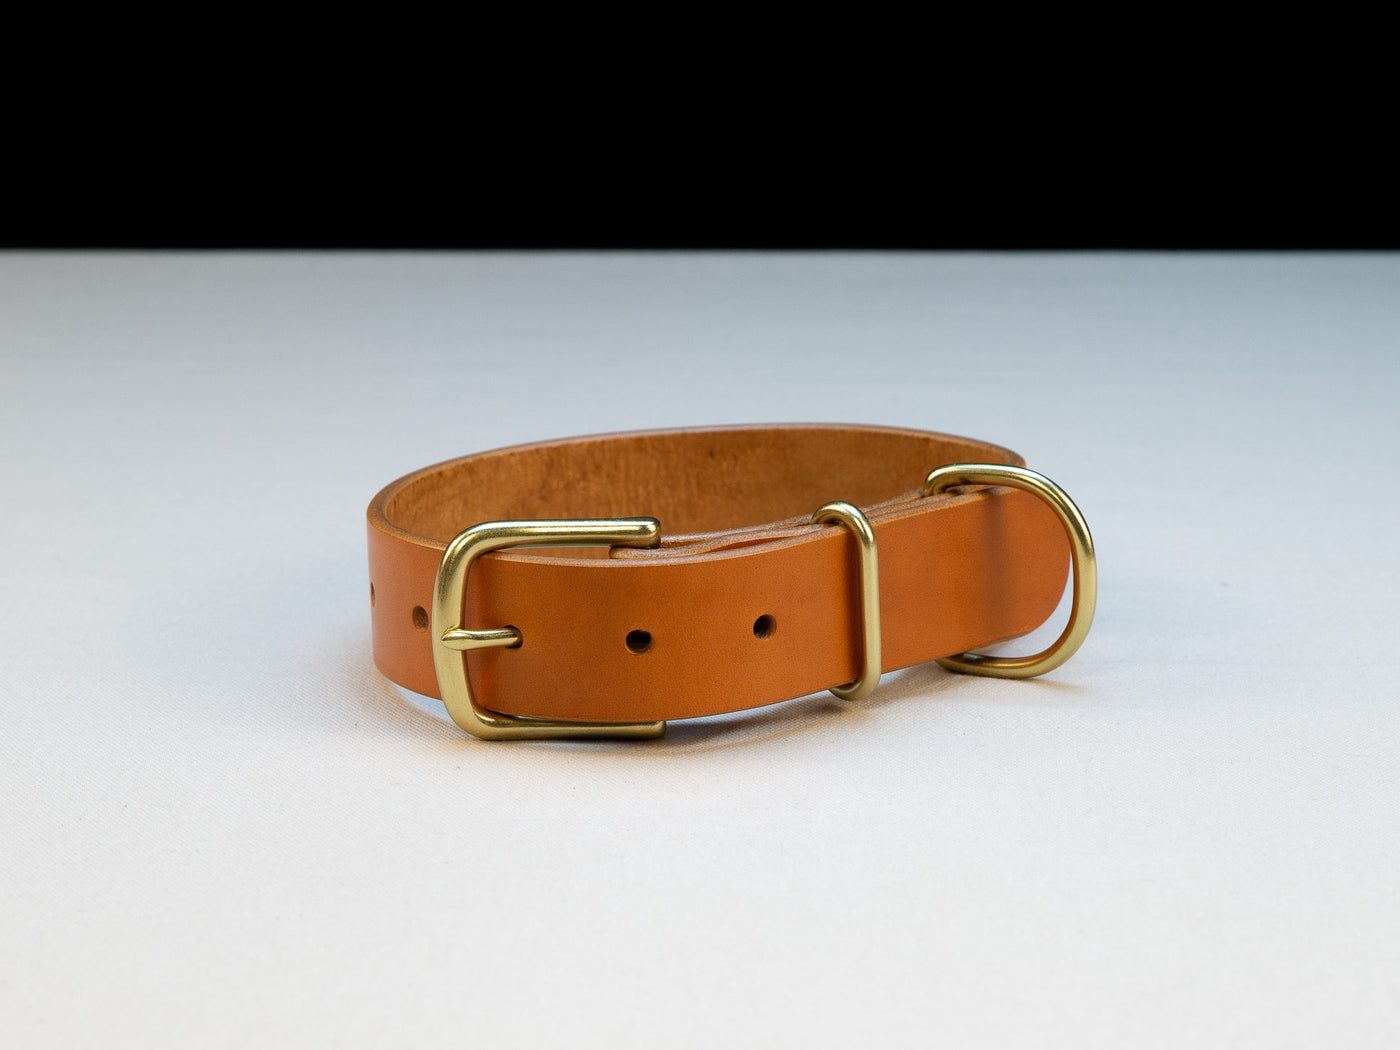 Leather Belt Dog Collar - Tan English Bridle Leather - Atlas Leathercraft - Handmade Australian Leather Goods